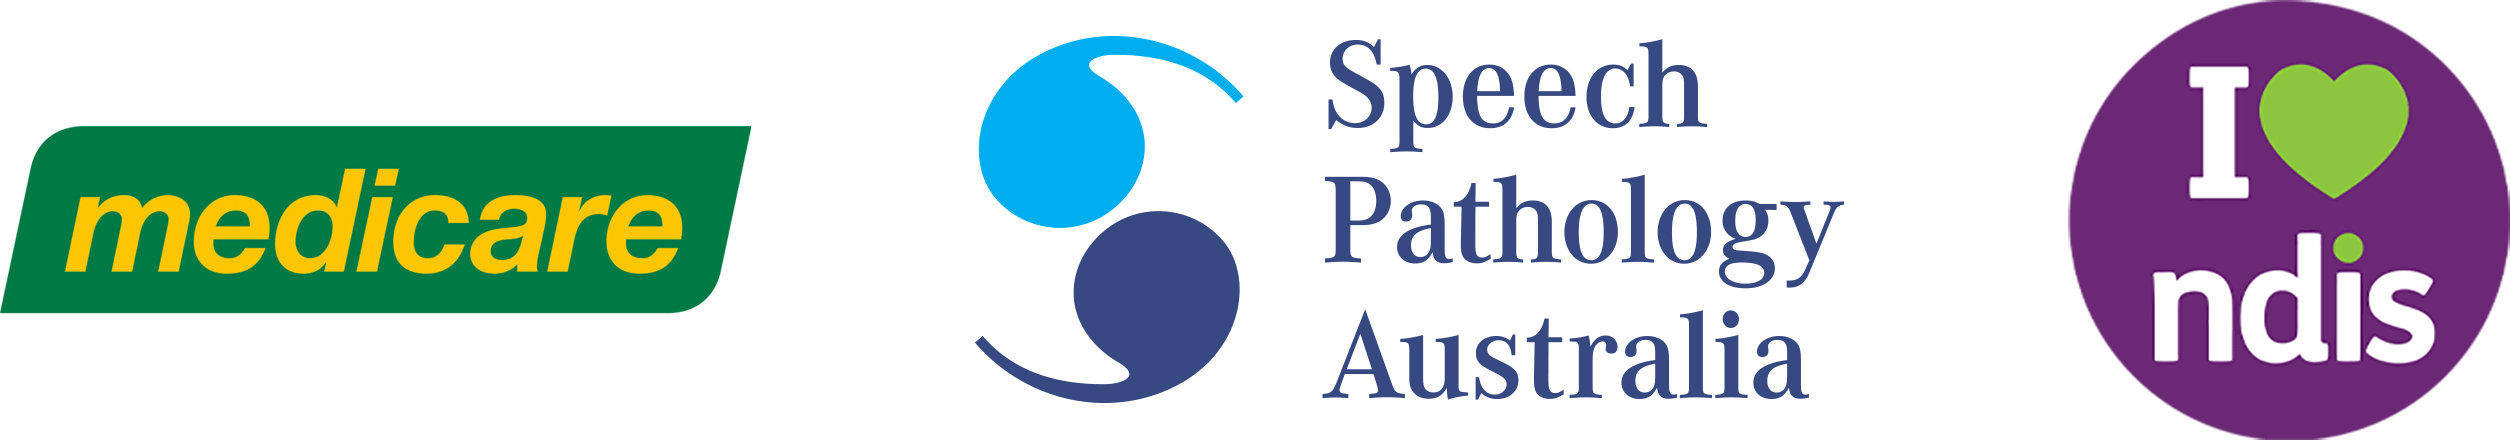 Medicare Speech Pathology Australia NDIS